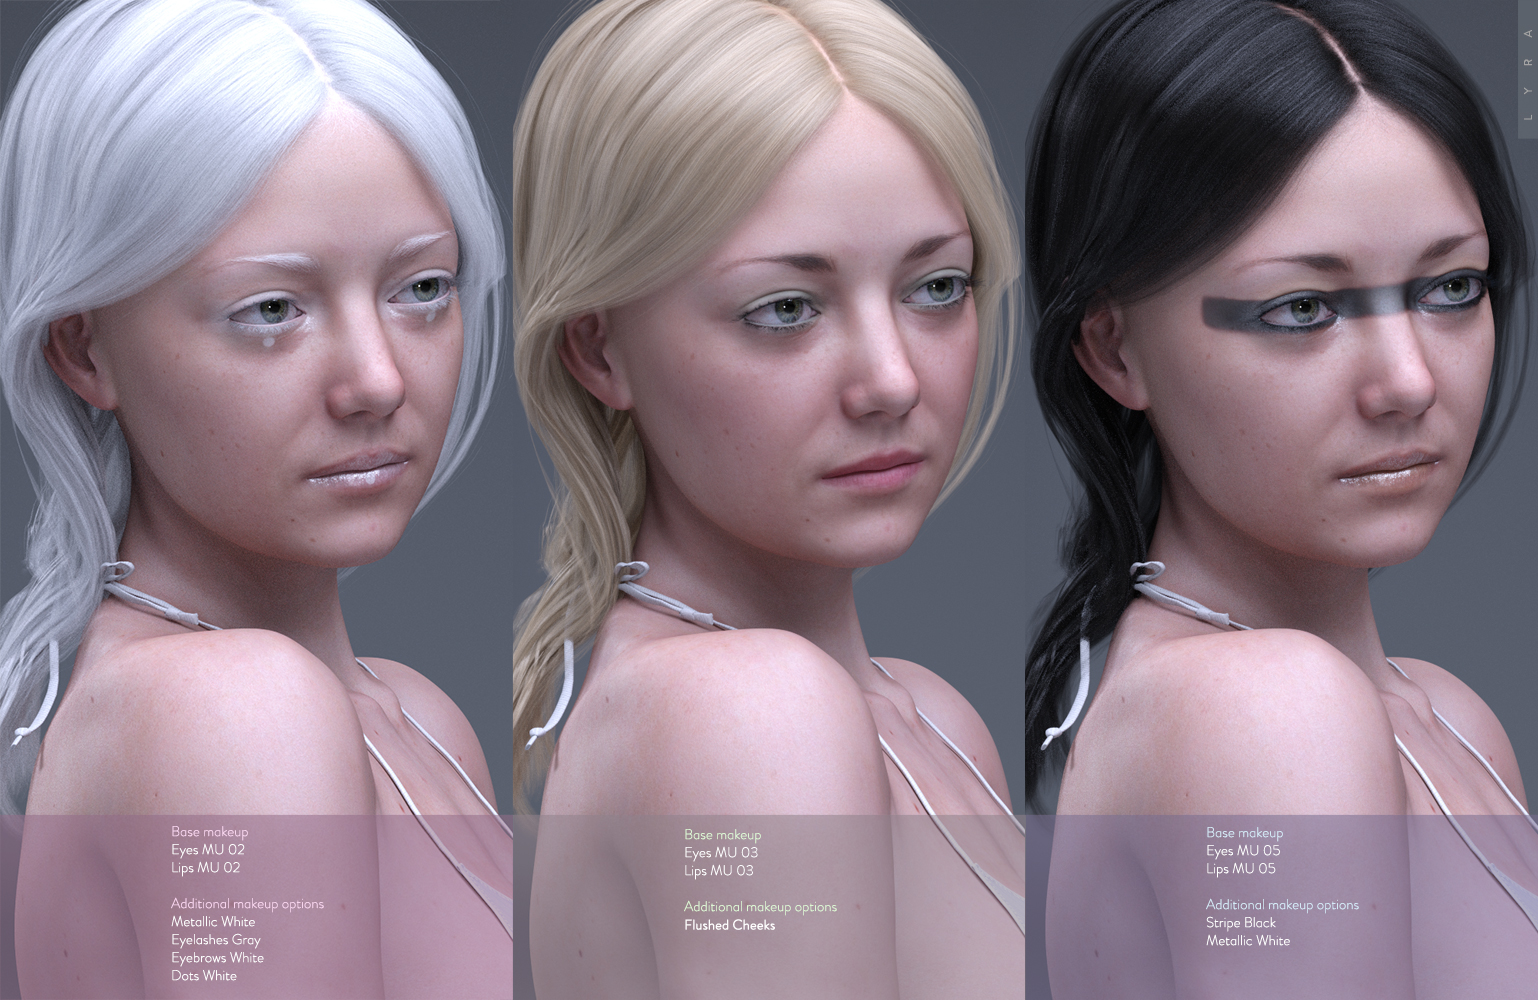 Lyra HD for Genesis 8 Female by: bluejaunte, 3D Models by Daz 3D